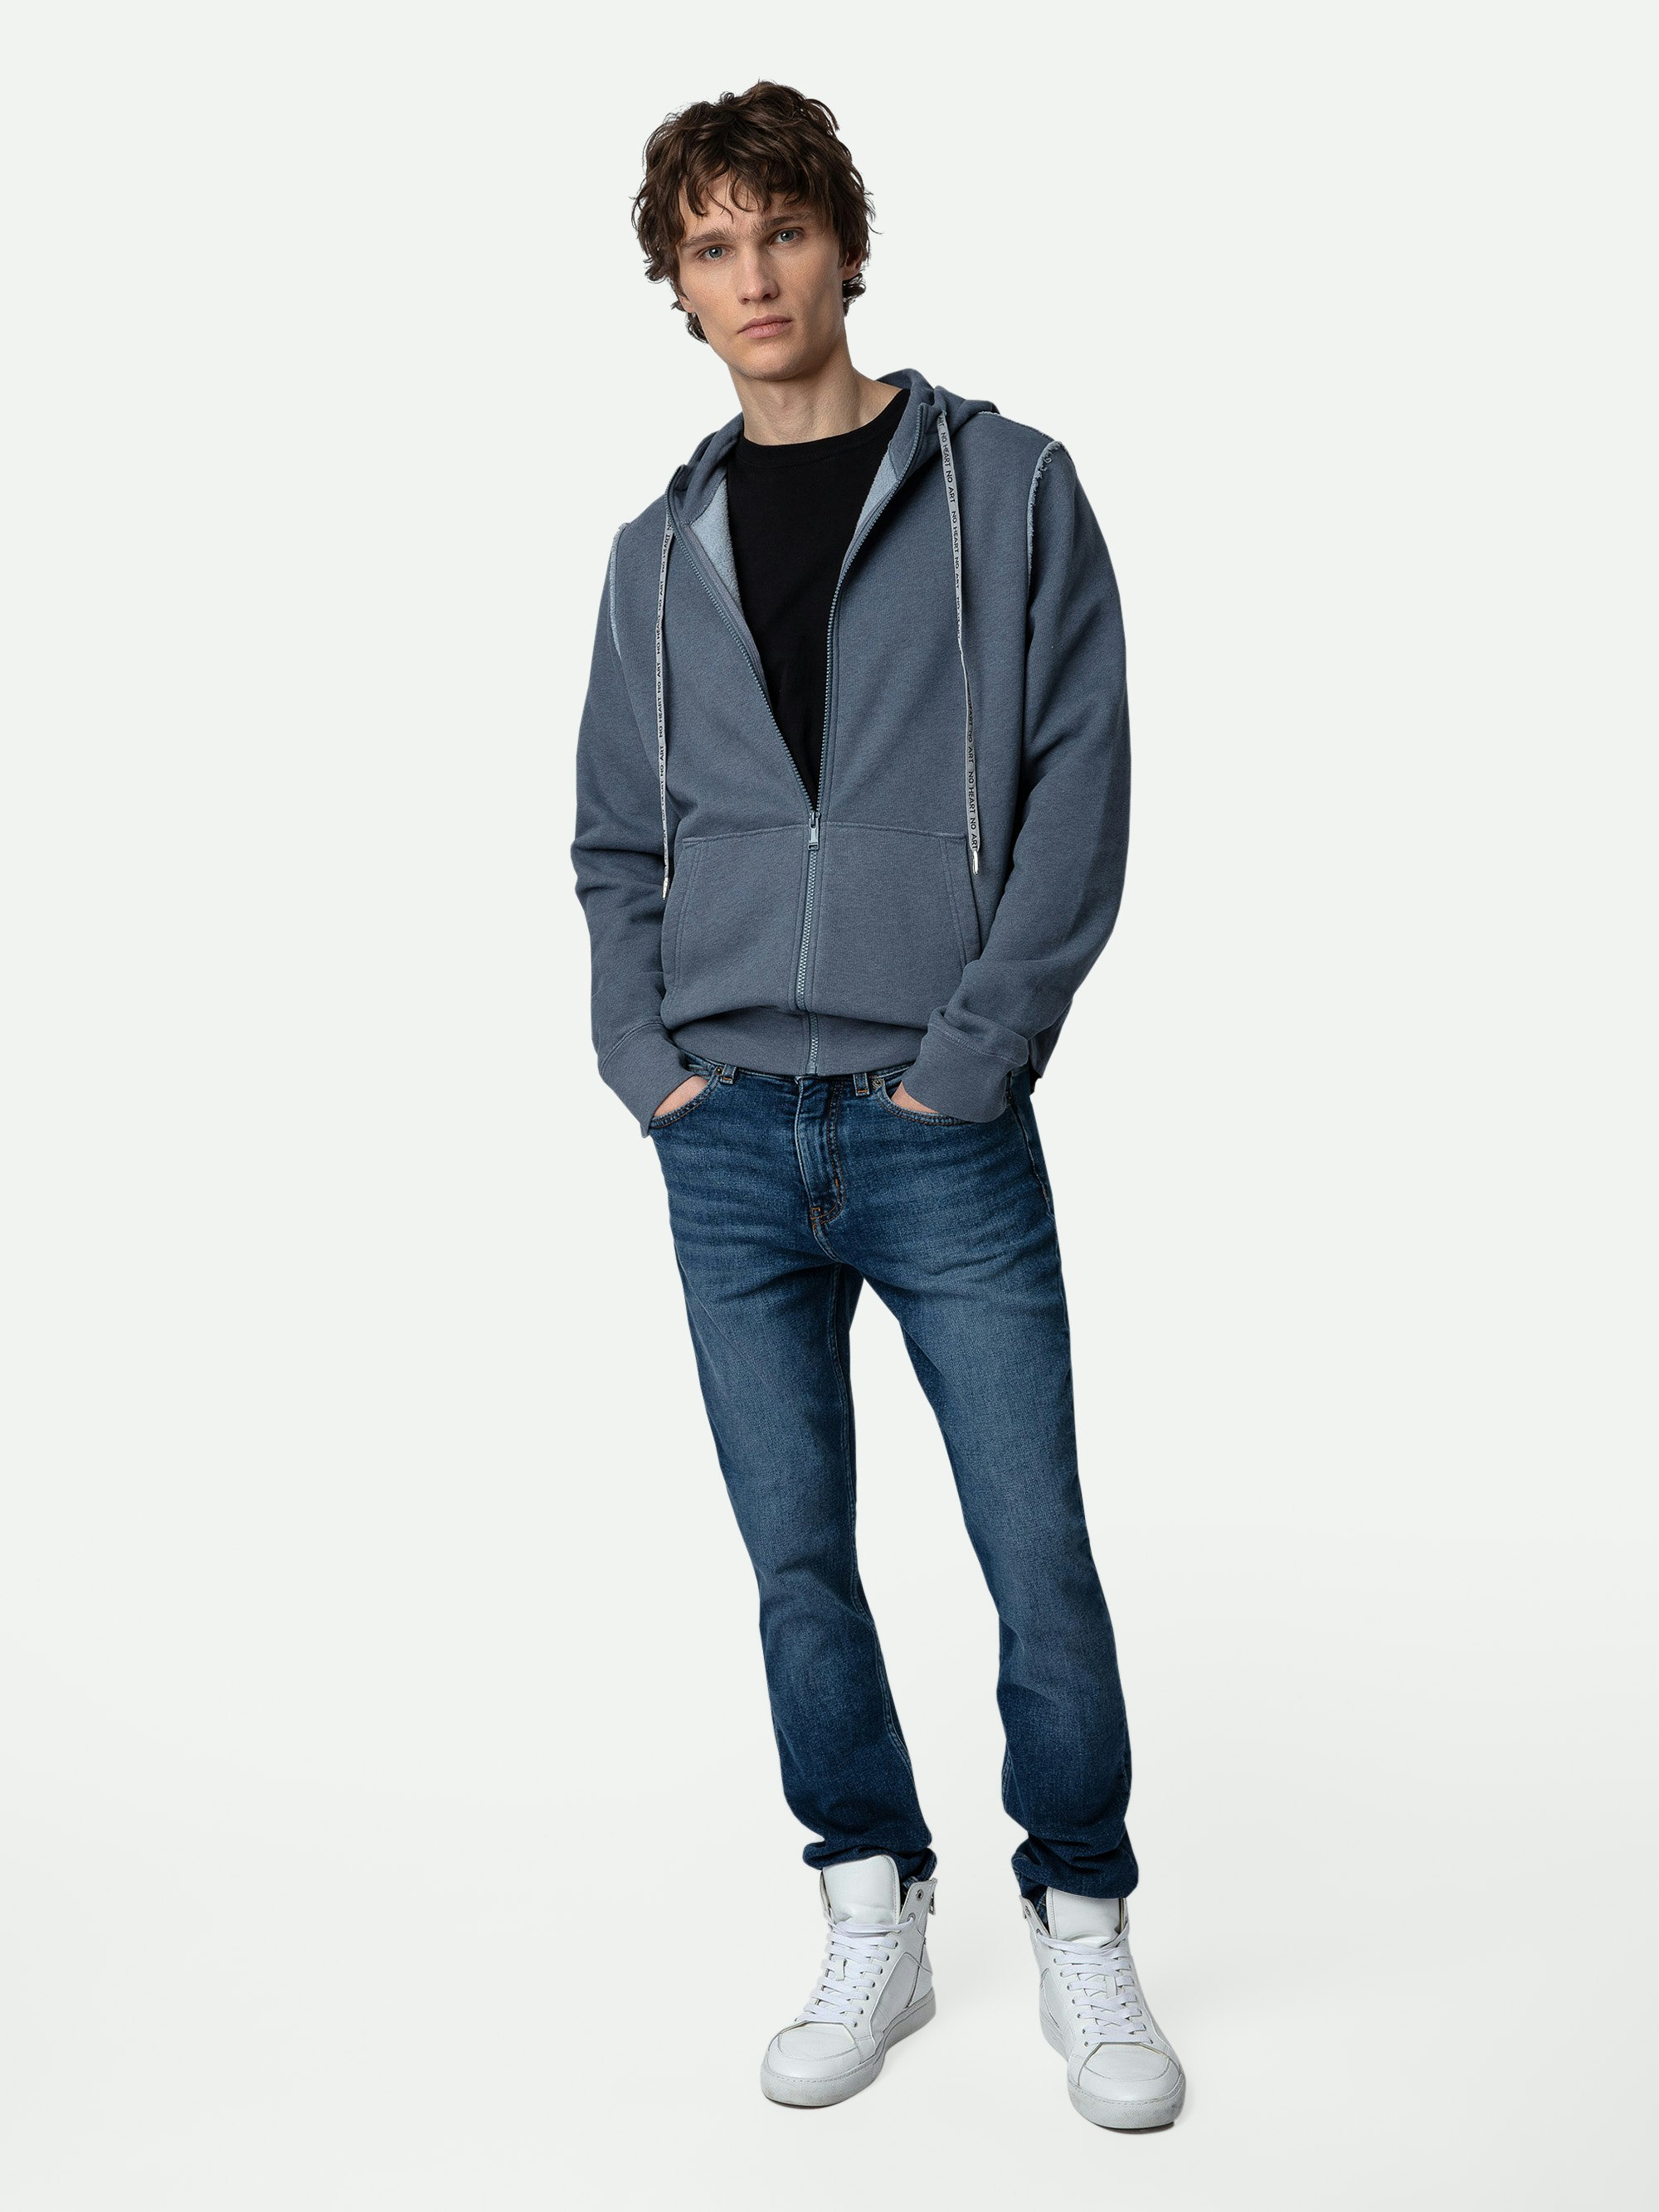 Alex Sweatshirt - Men’s blue cotton zip-up fleece sweatshirt with motifs and tags on the back.